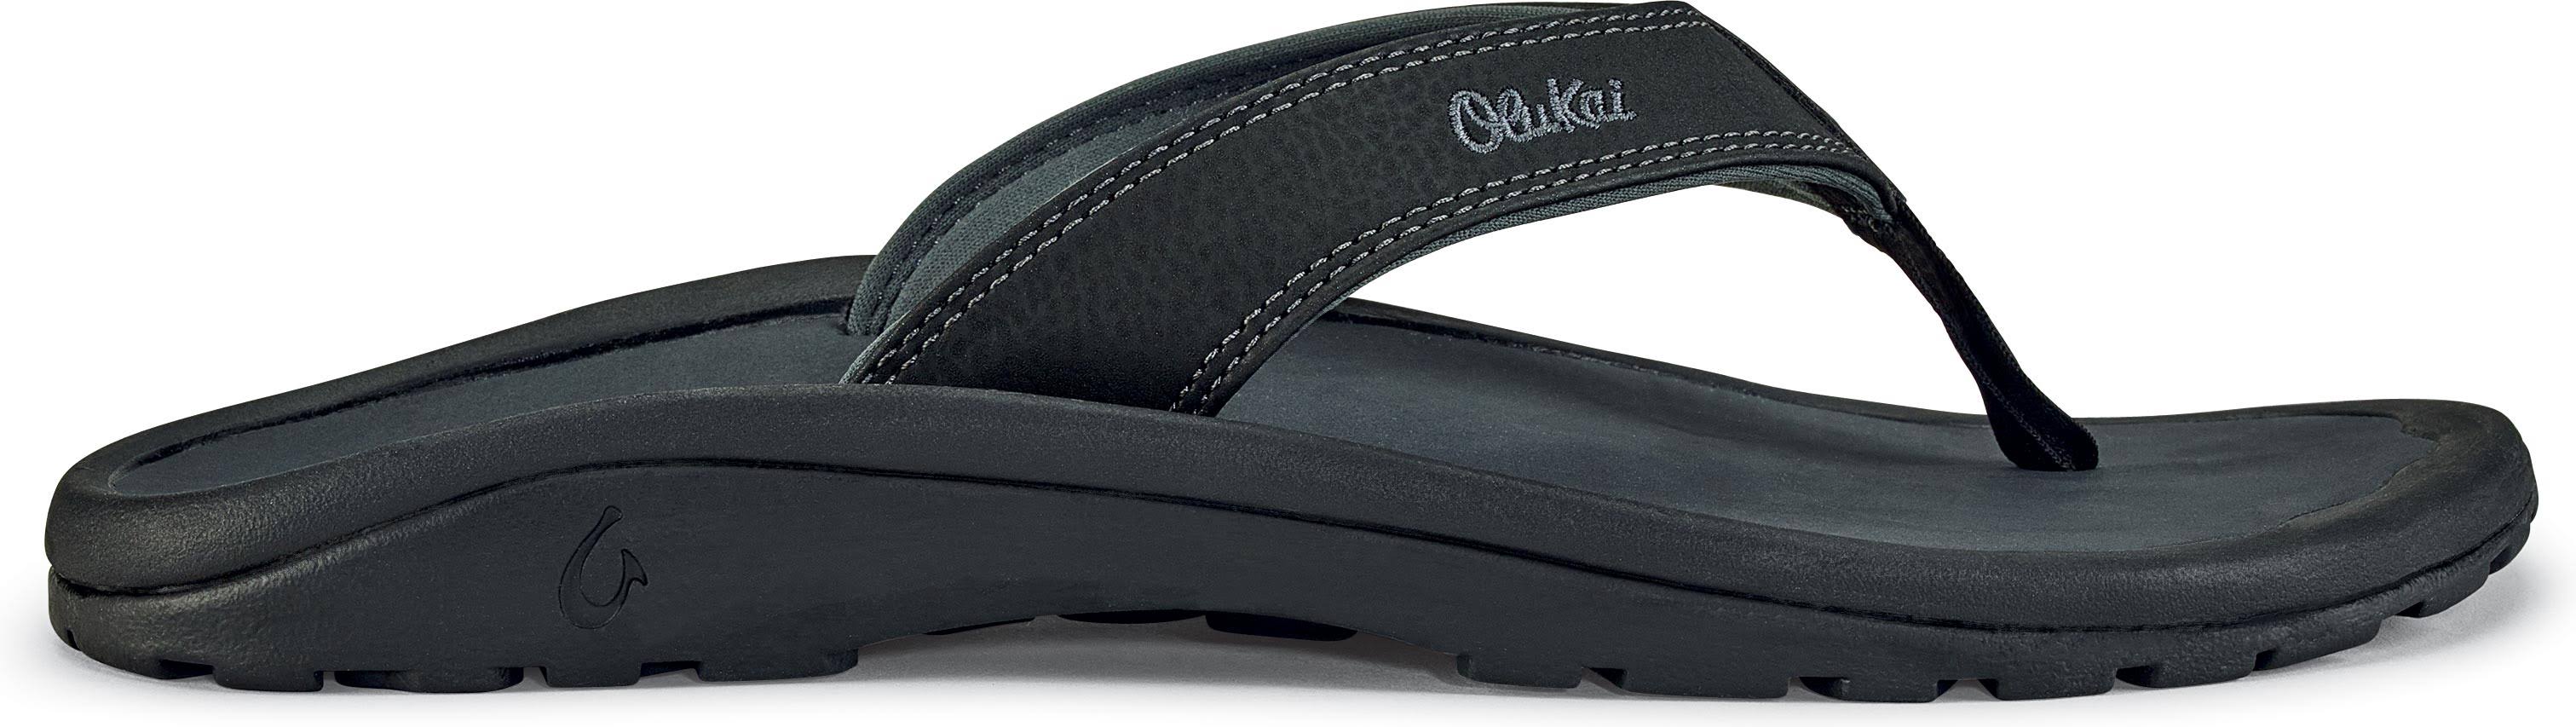 OluKai Mens Ohana Thong Sandal - Black and Dark Shadow, 8 US